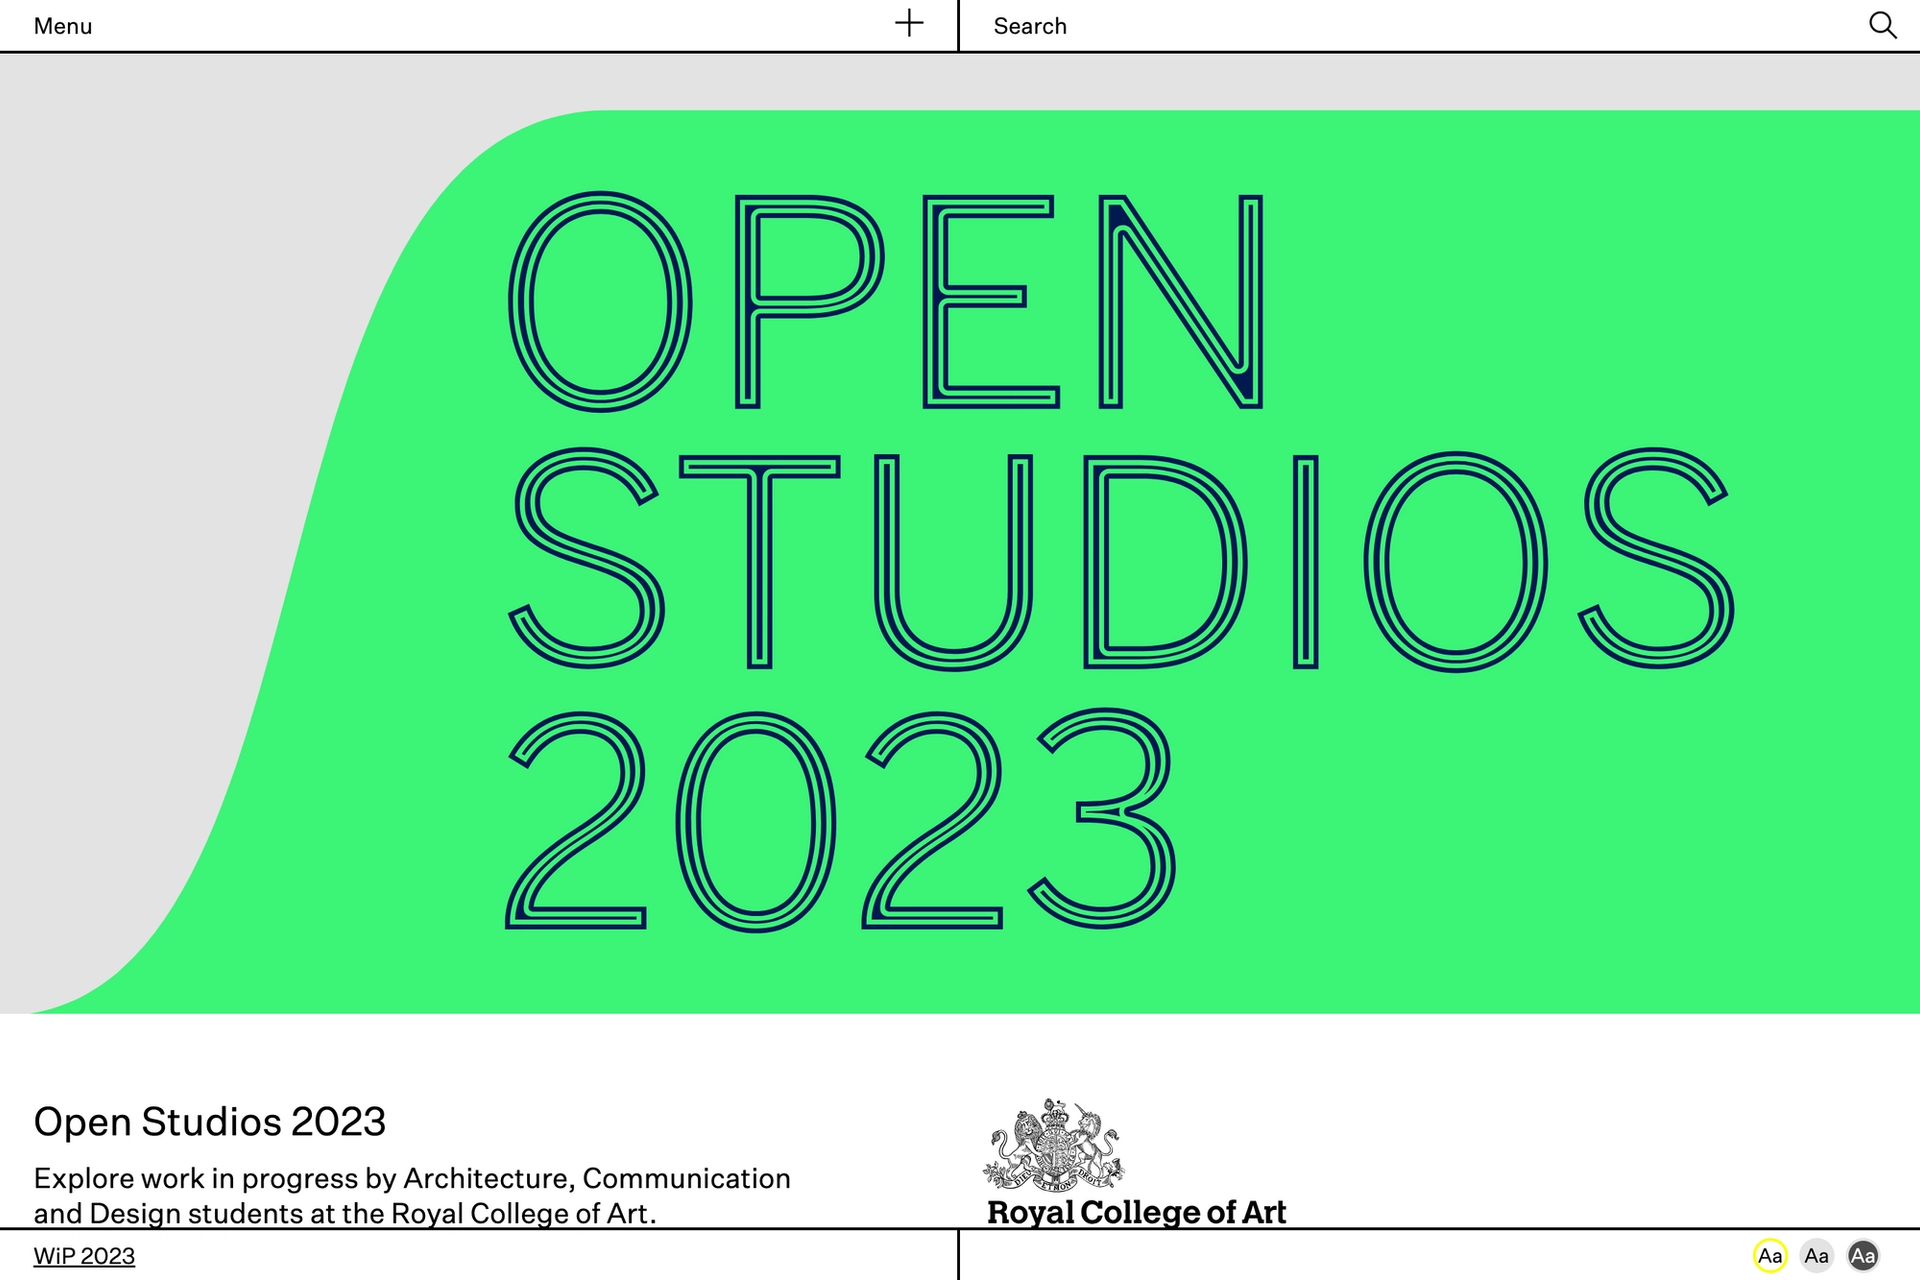 Royal College of Art Open Studios 2023